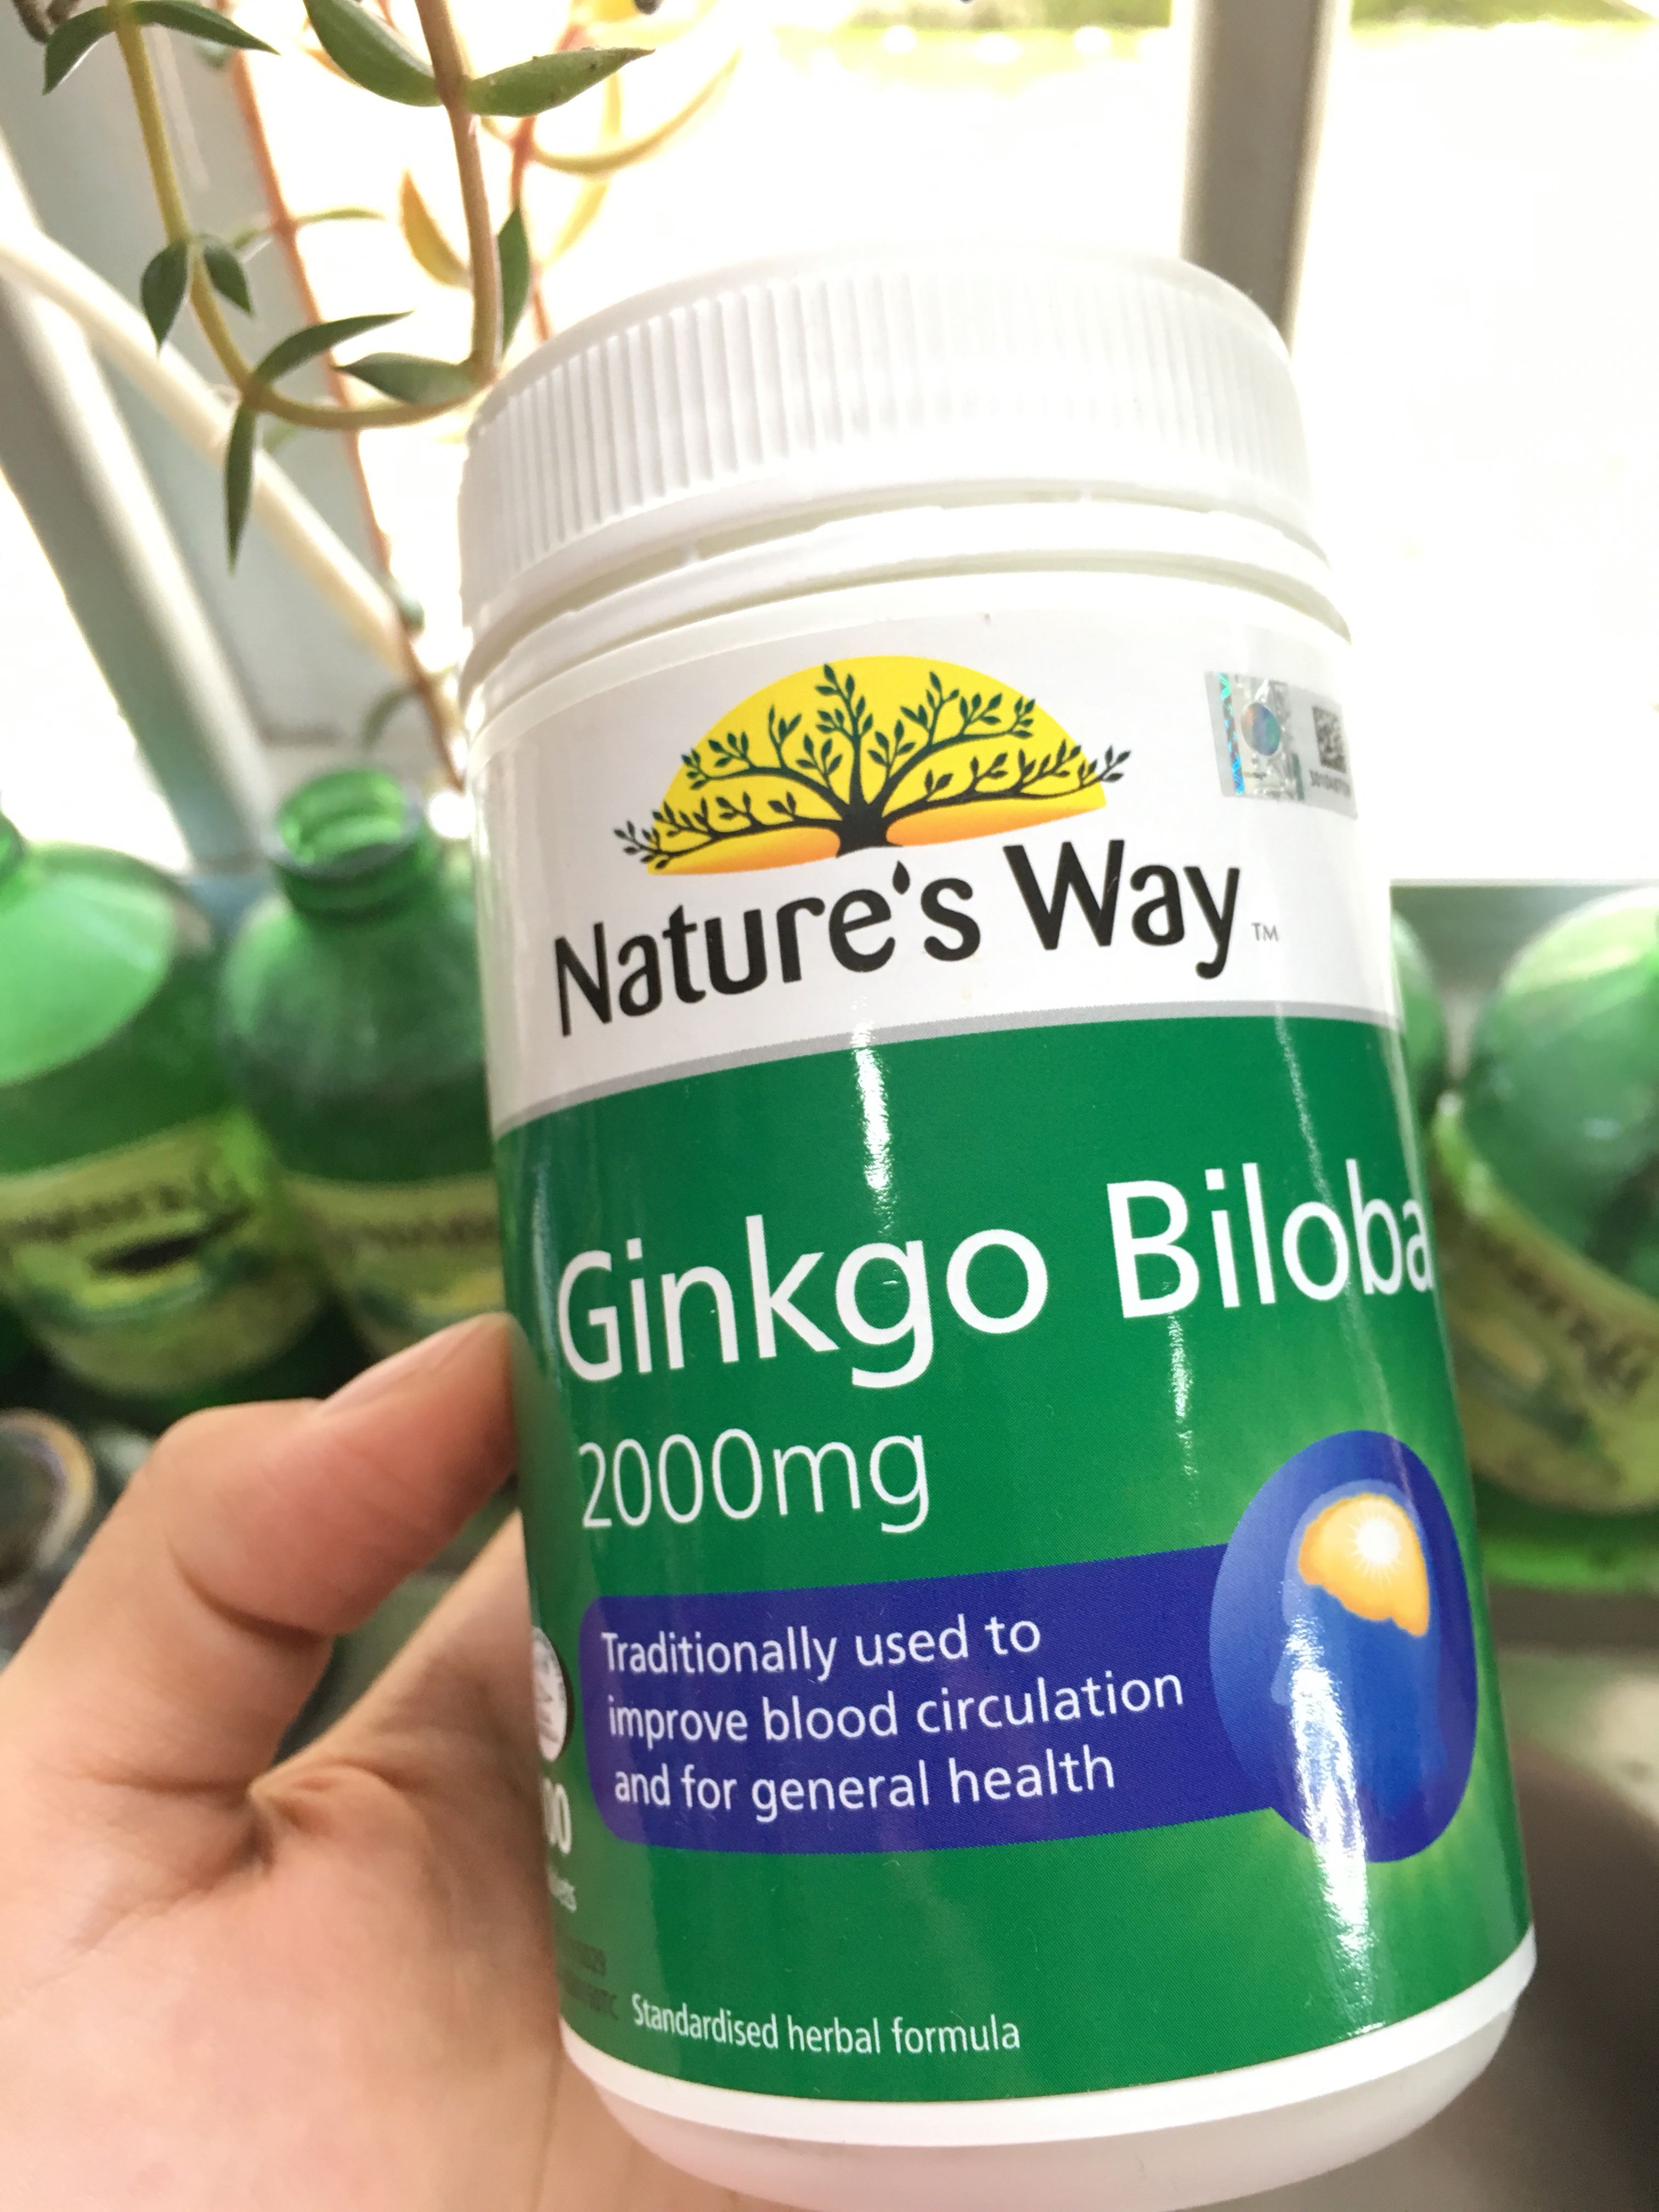 Natural’s Way Ginkgo 100tablets  + Free 30 tablets #CarousellBelanja